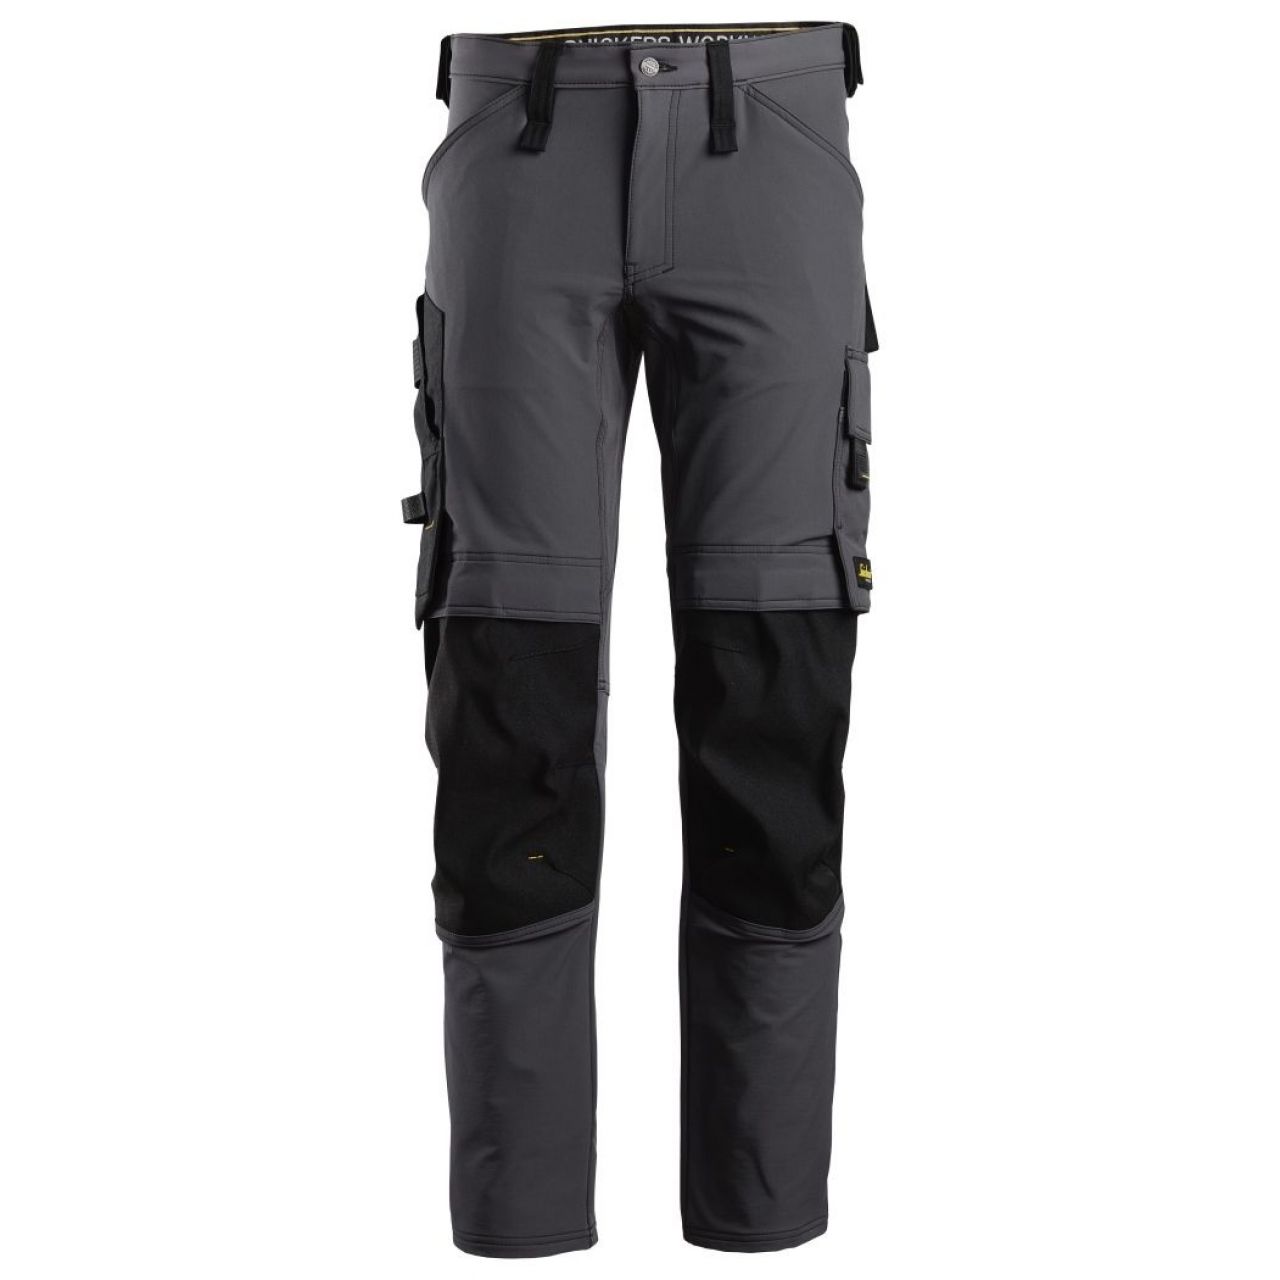 Pantalon elastico AllroundWork gris acero-negro talla 064